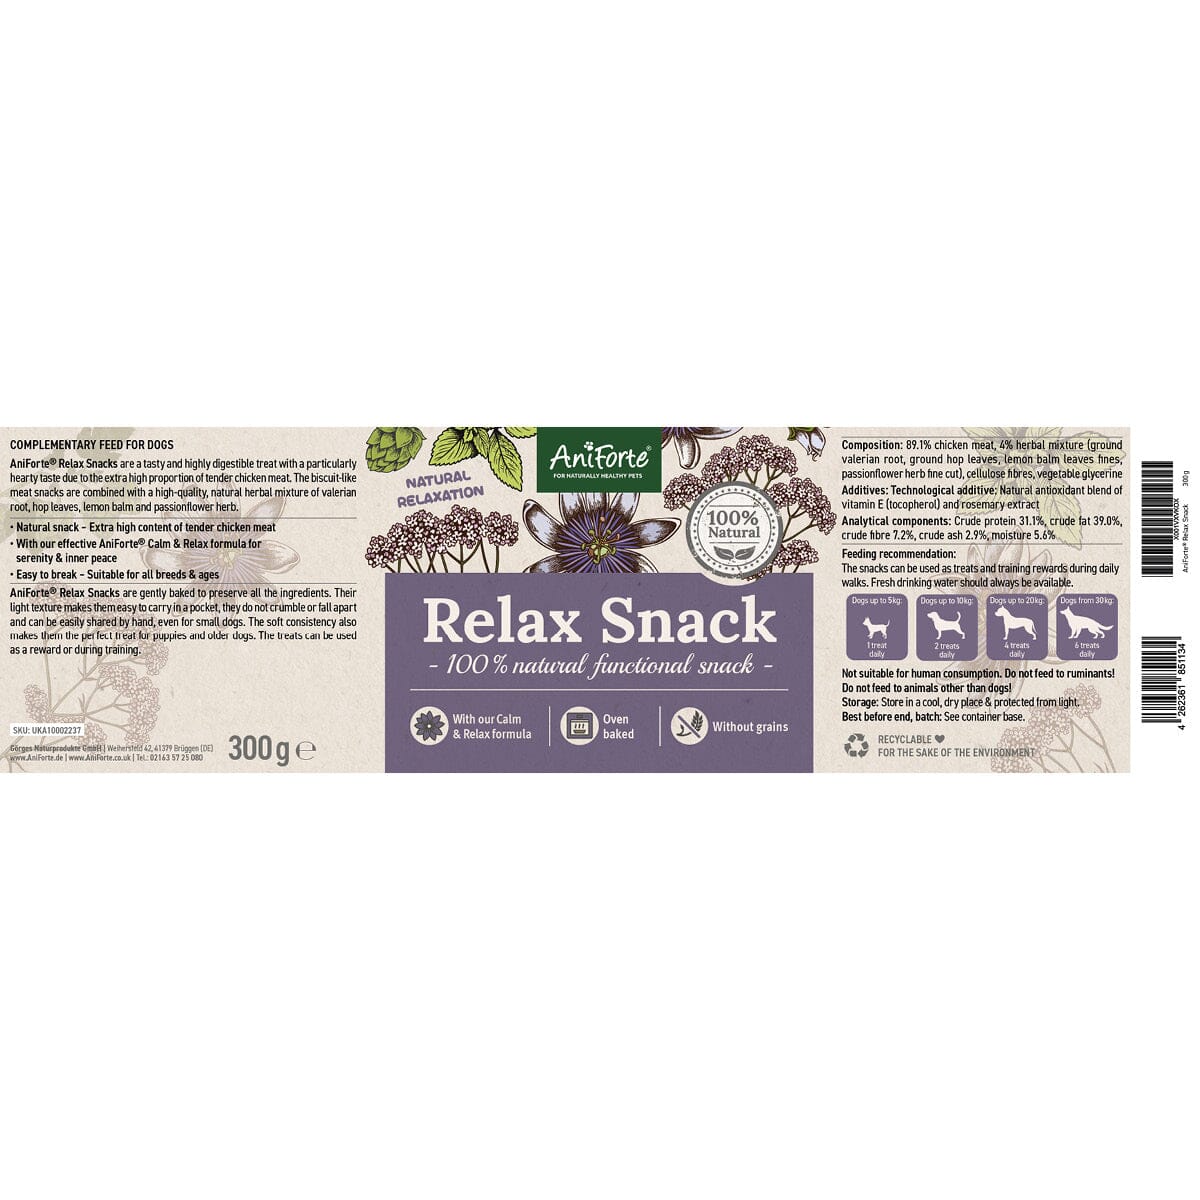 Relax Snack - AniForte UK